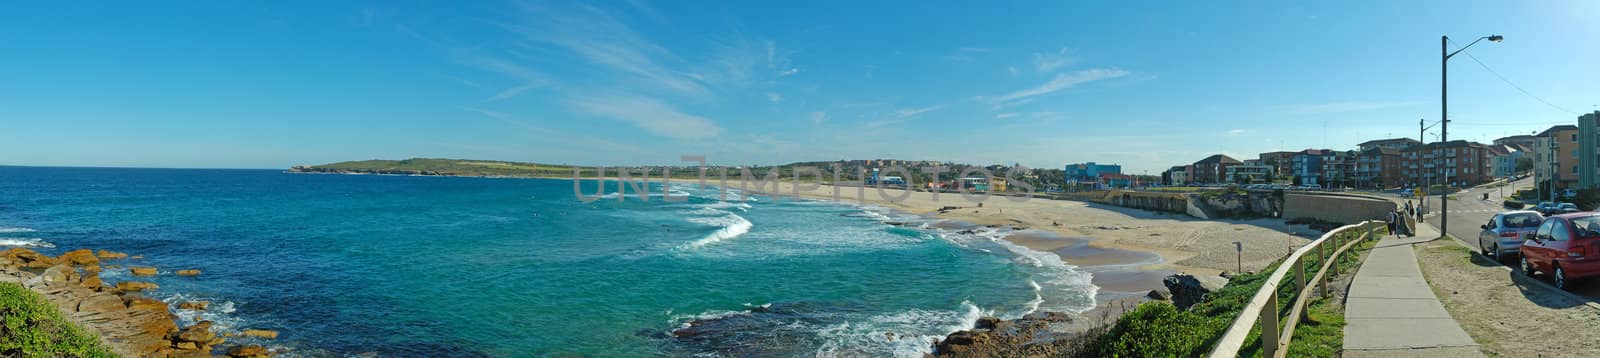 Maroubra Beach in Sydney panorama photo